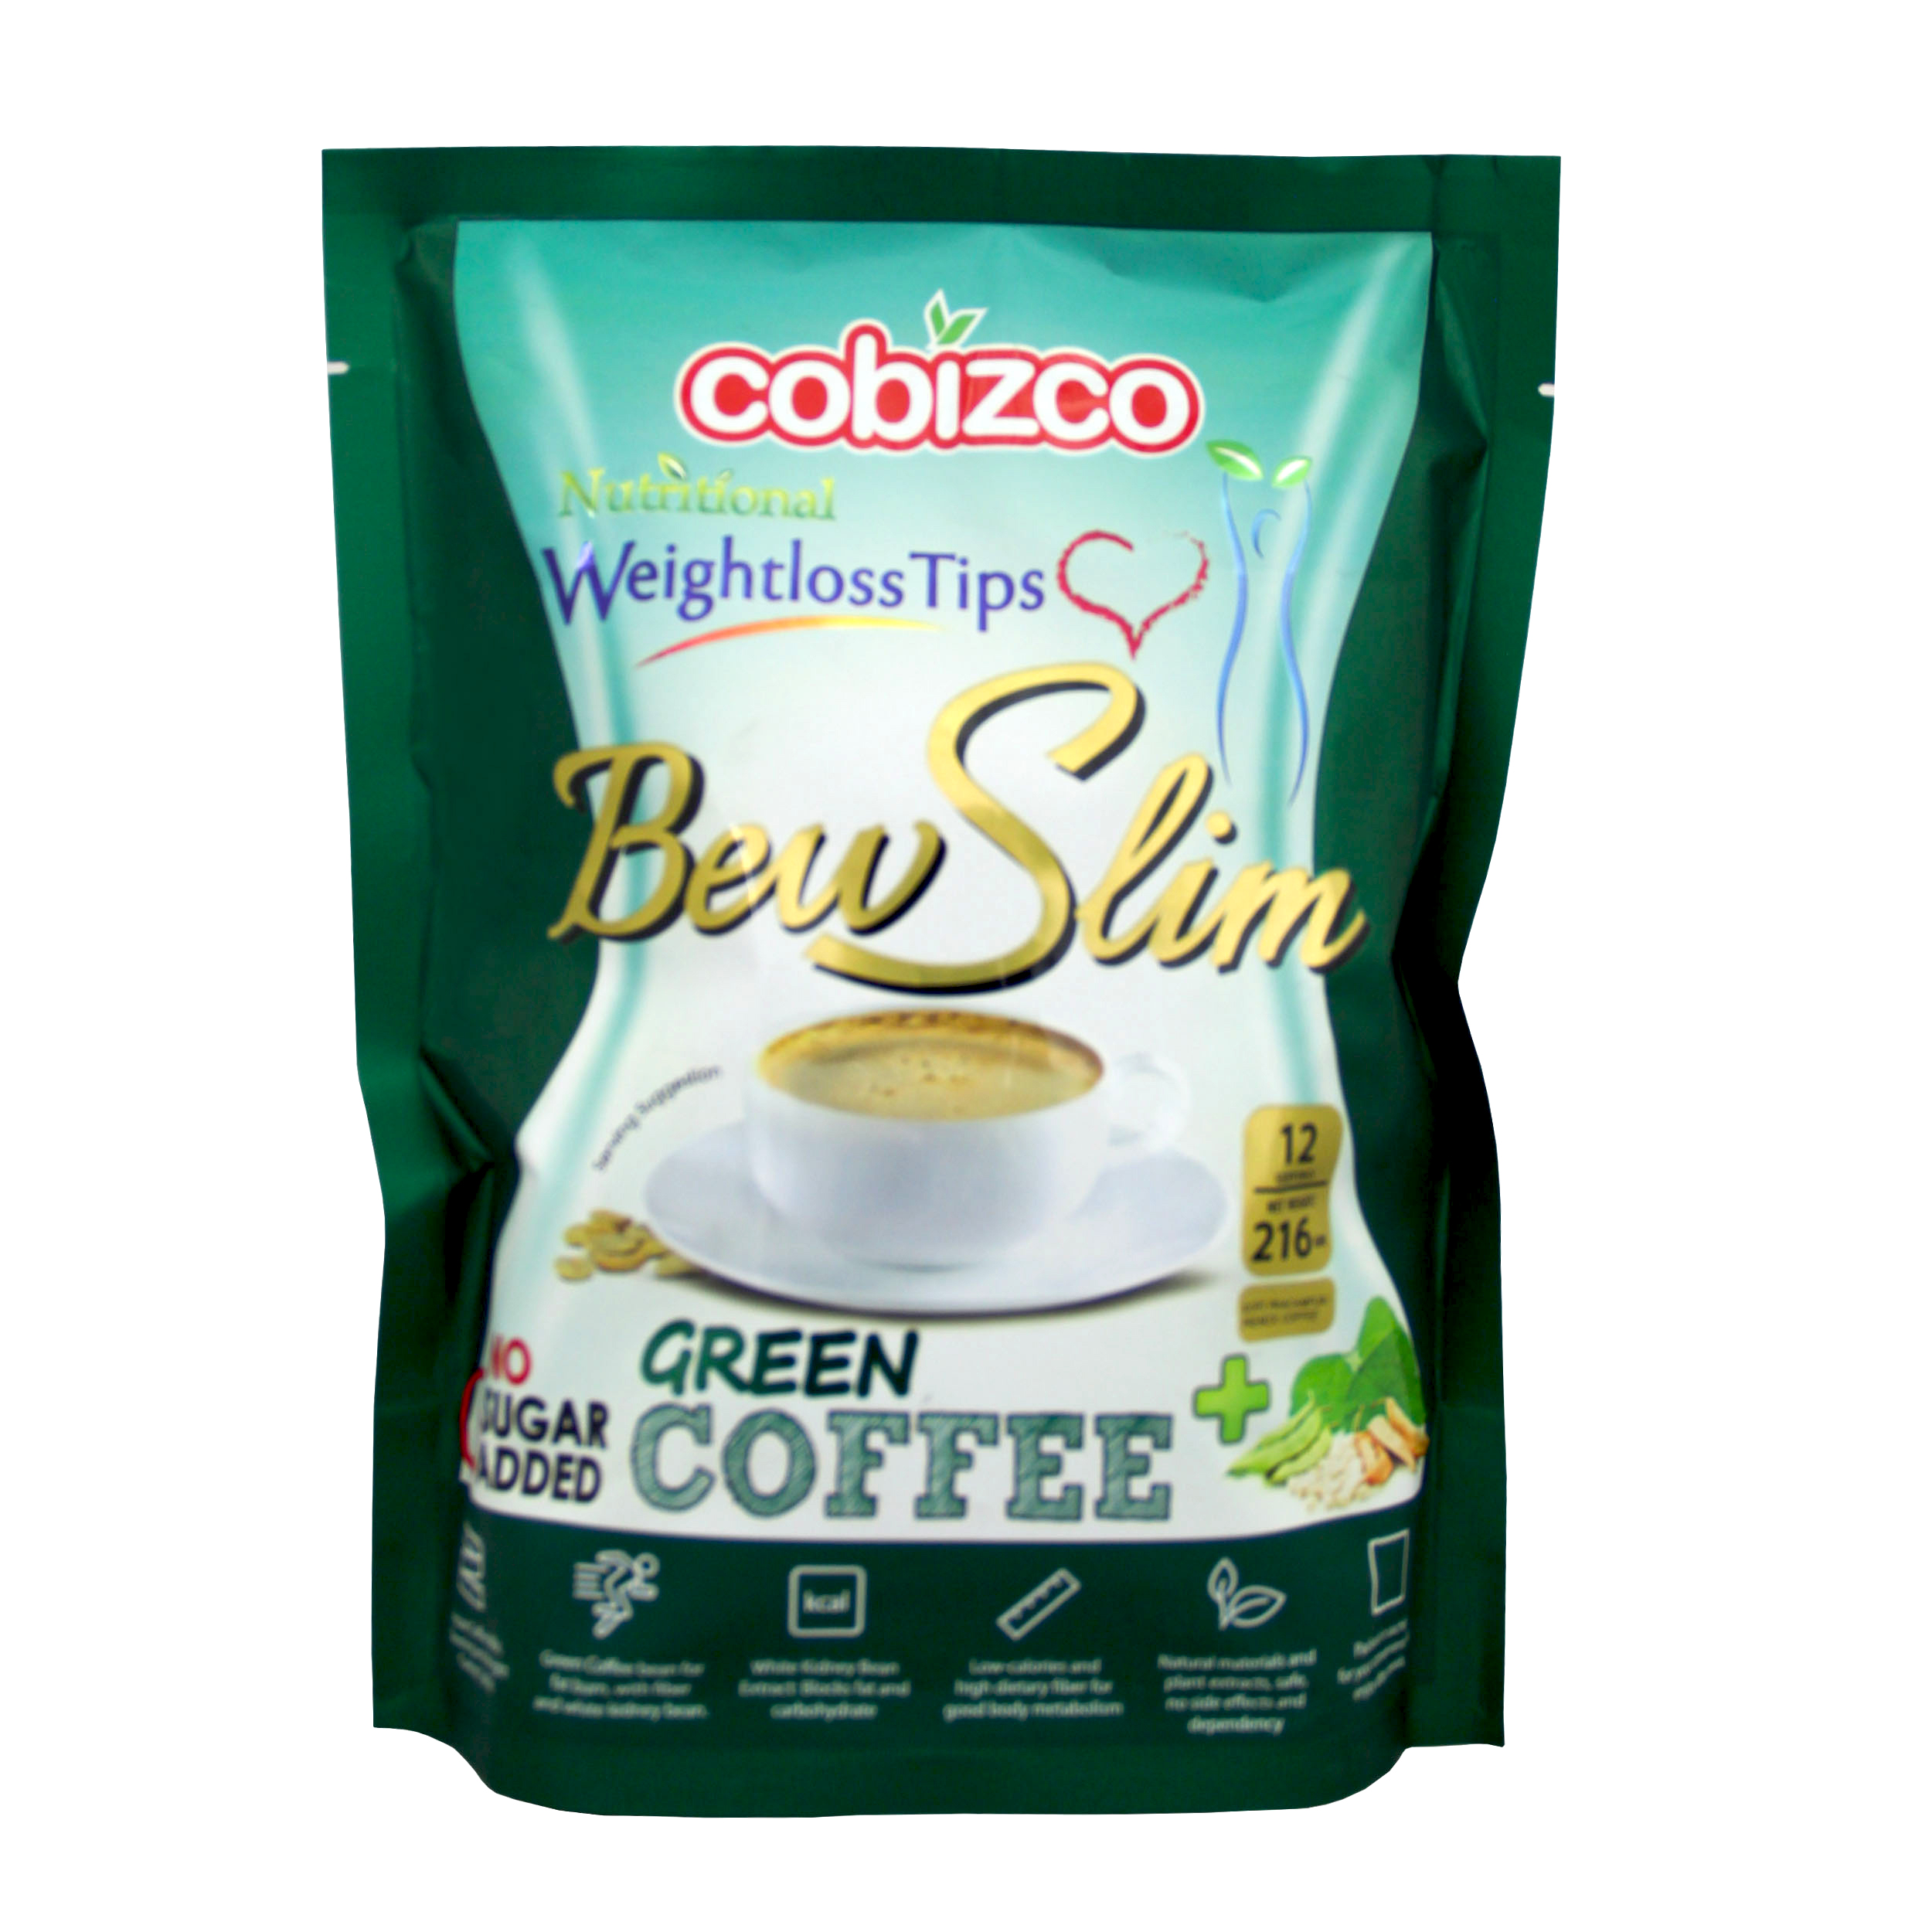 پودر قهوه فوری مخلوط کوبیزکو - 216 گرم